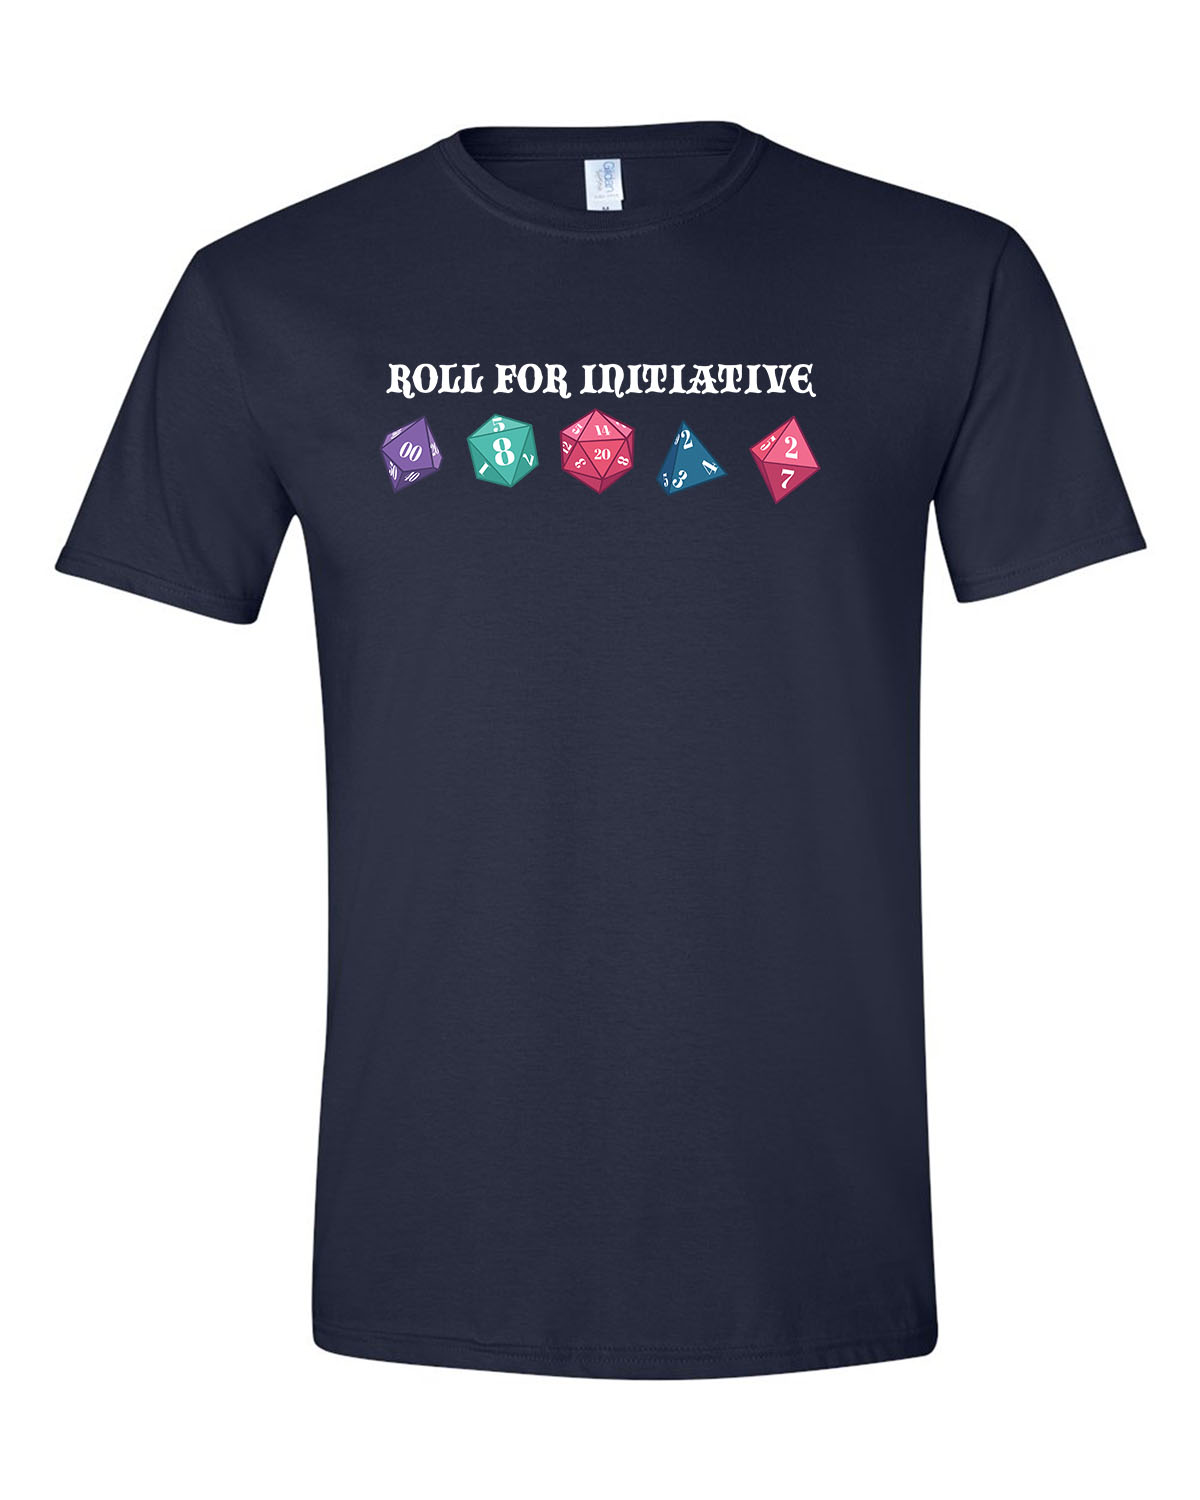 Roll for Initiative D&D Unisex T-Shirt